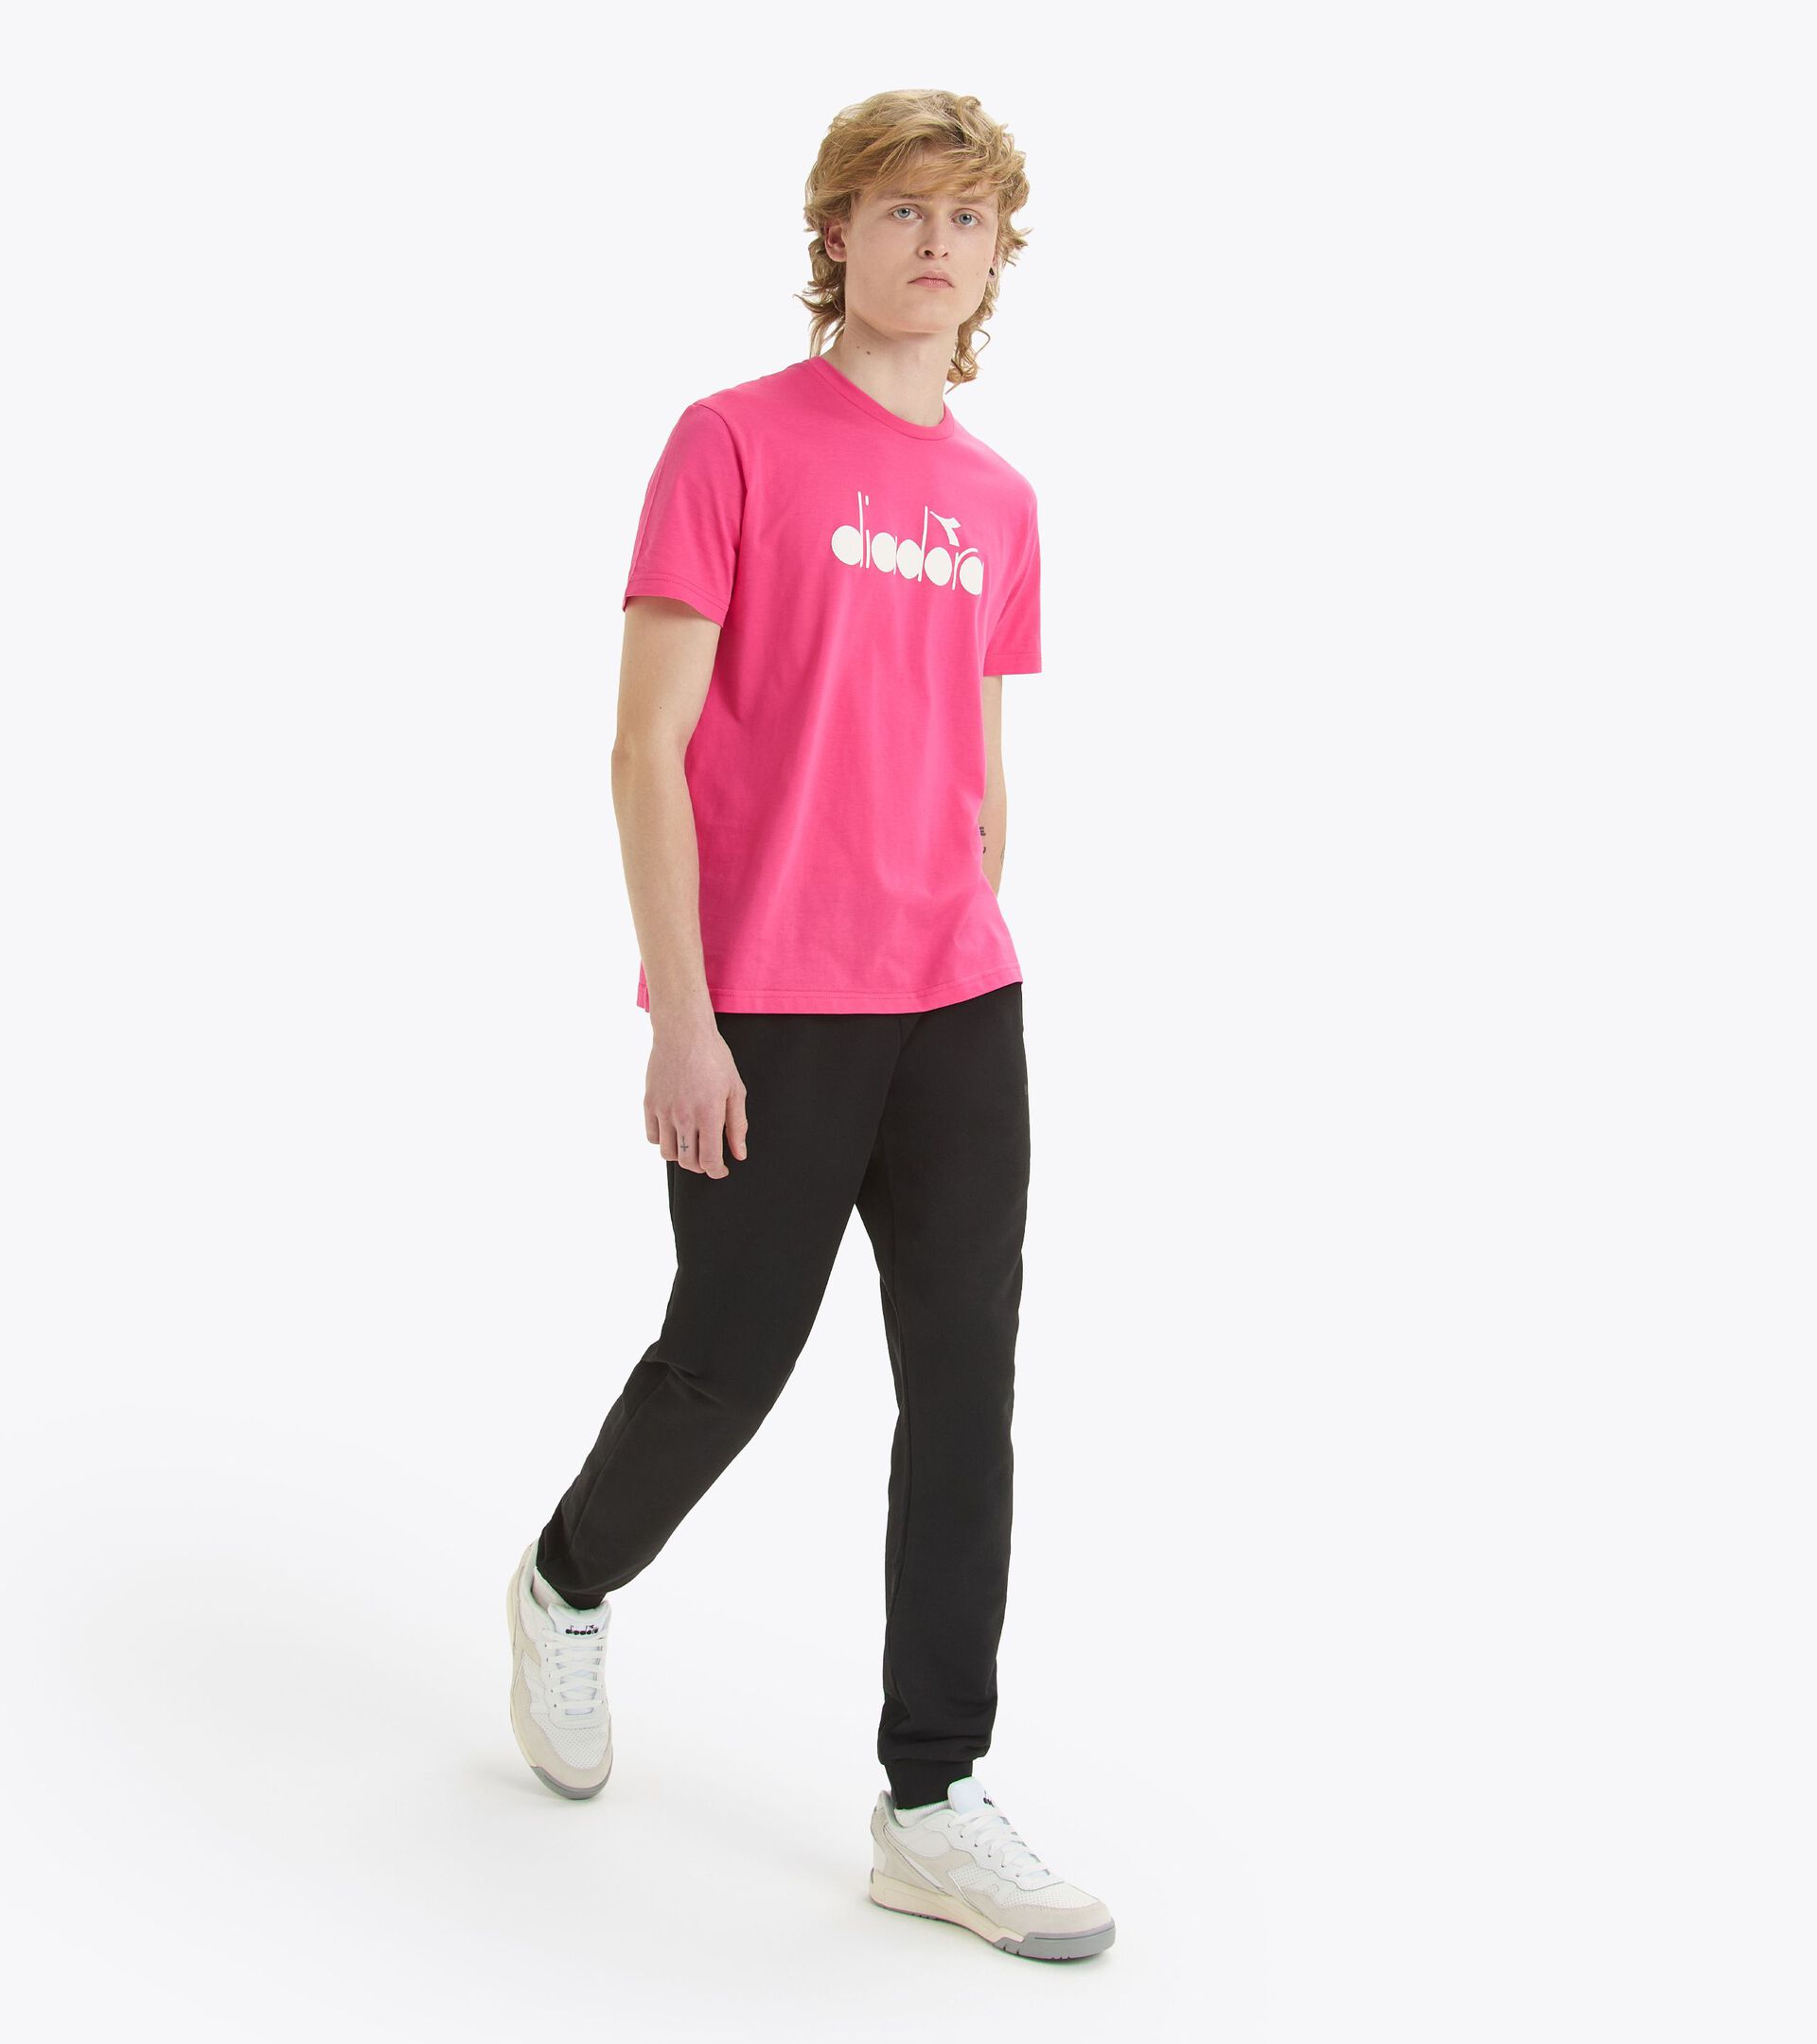 T-shirt - Made in Italy - Gender Neutral  T-SHIRT SS LOGO FRAMBOISE SORBET - Diadora